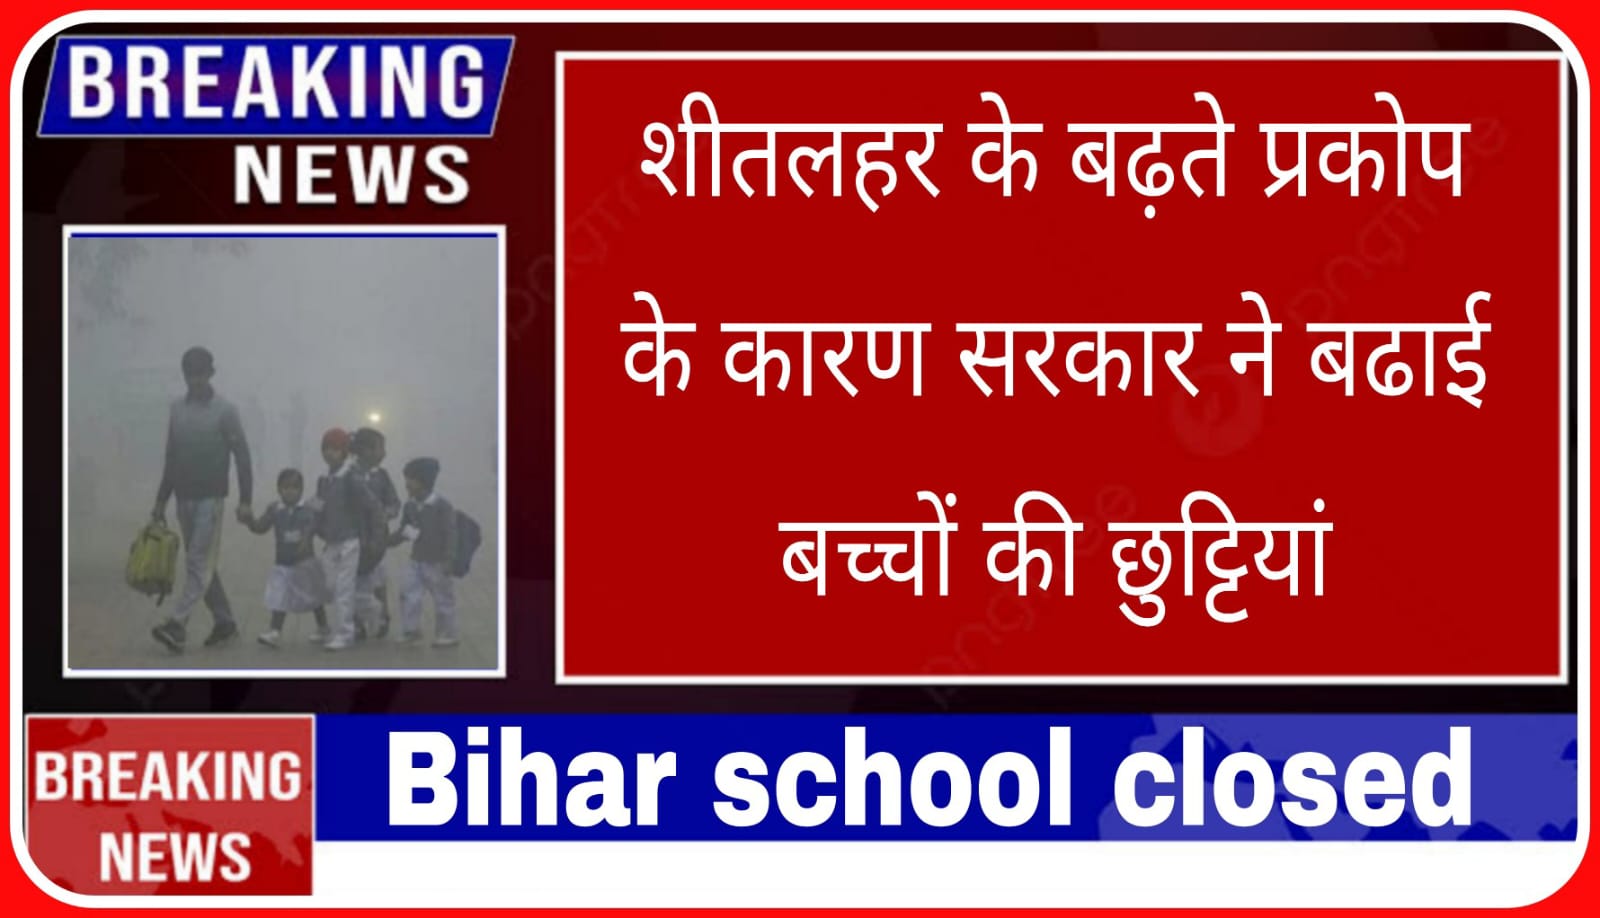 Bihar school holiday latest news